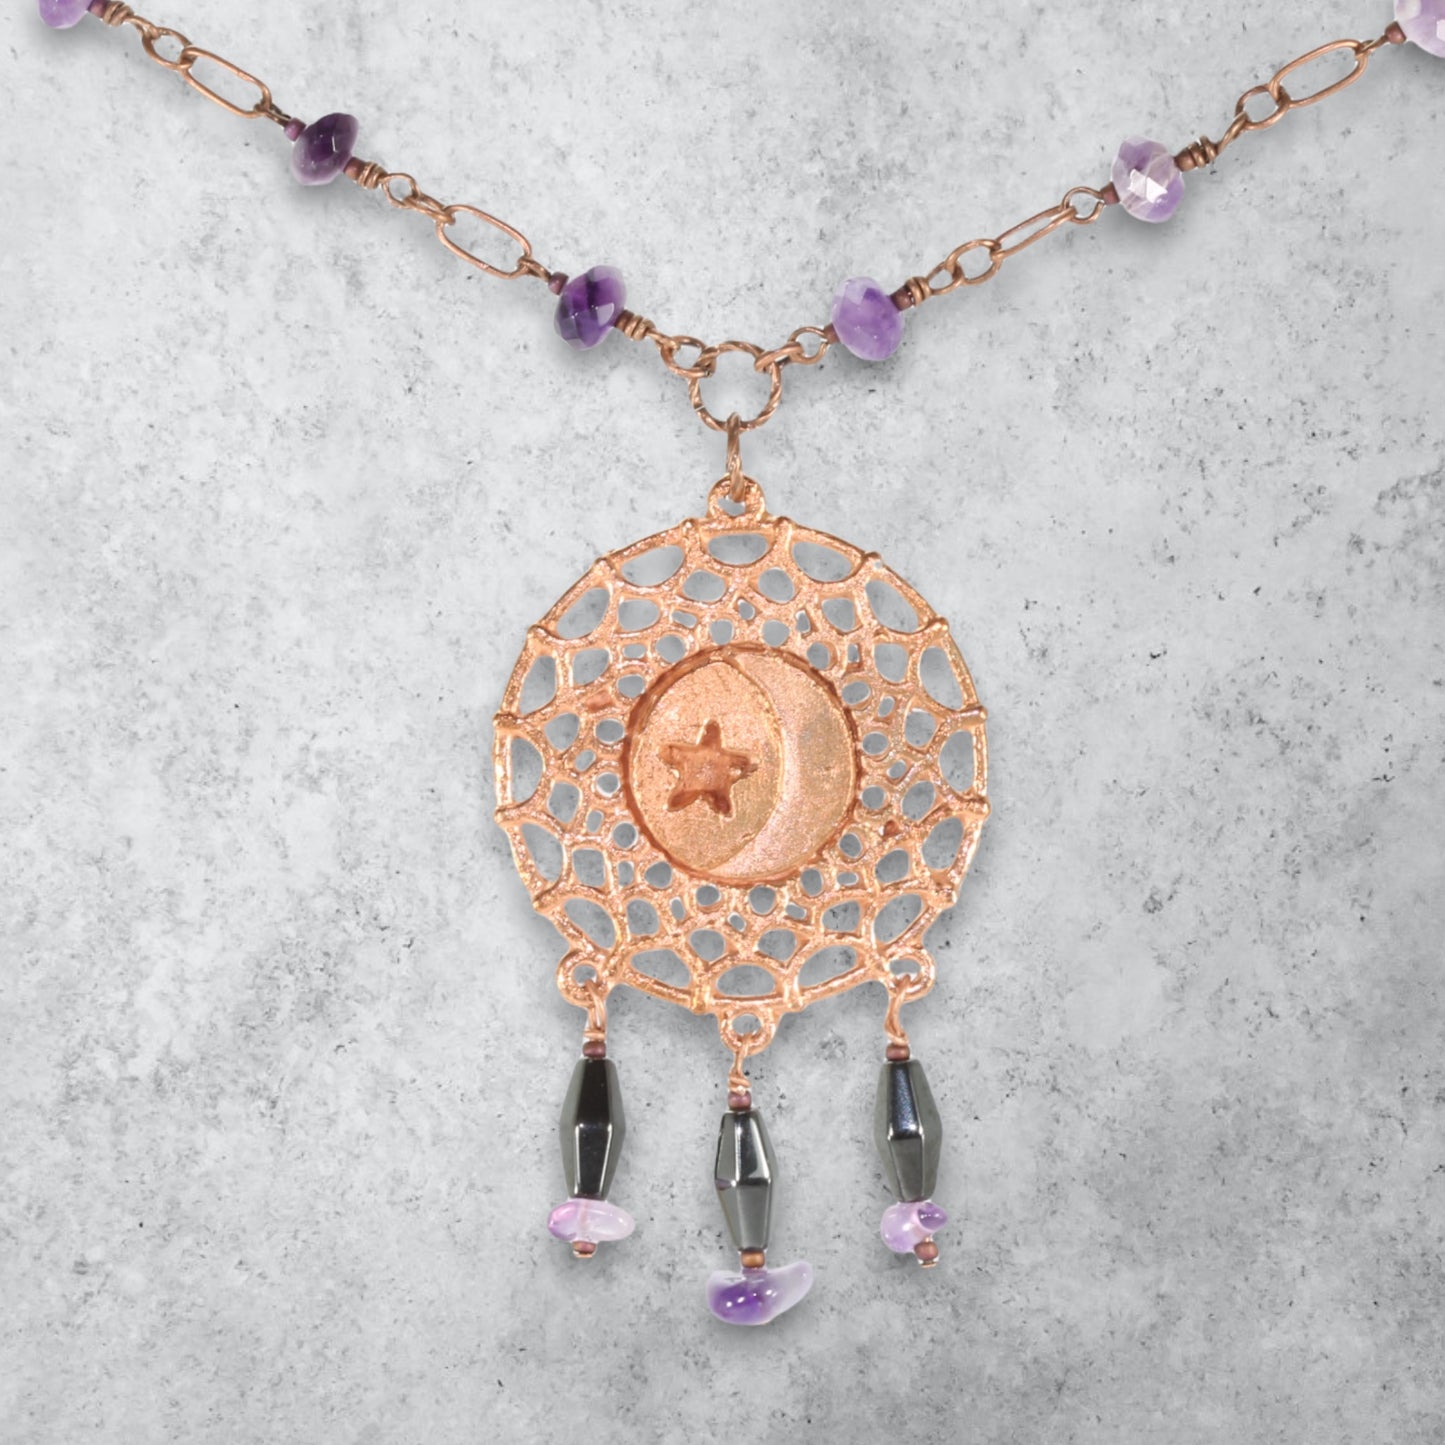 Lunar dreamcatcher amethyst crystal necklace 